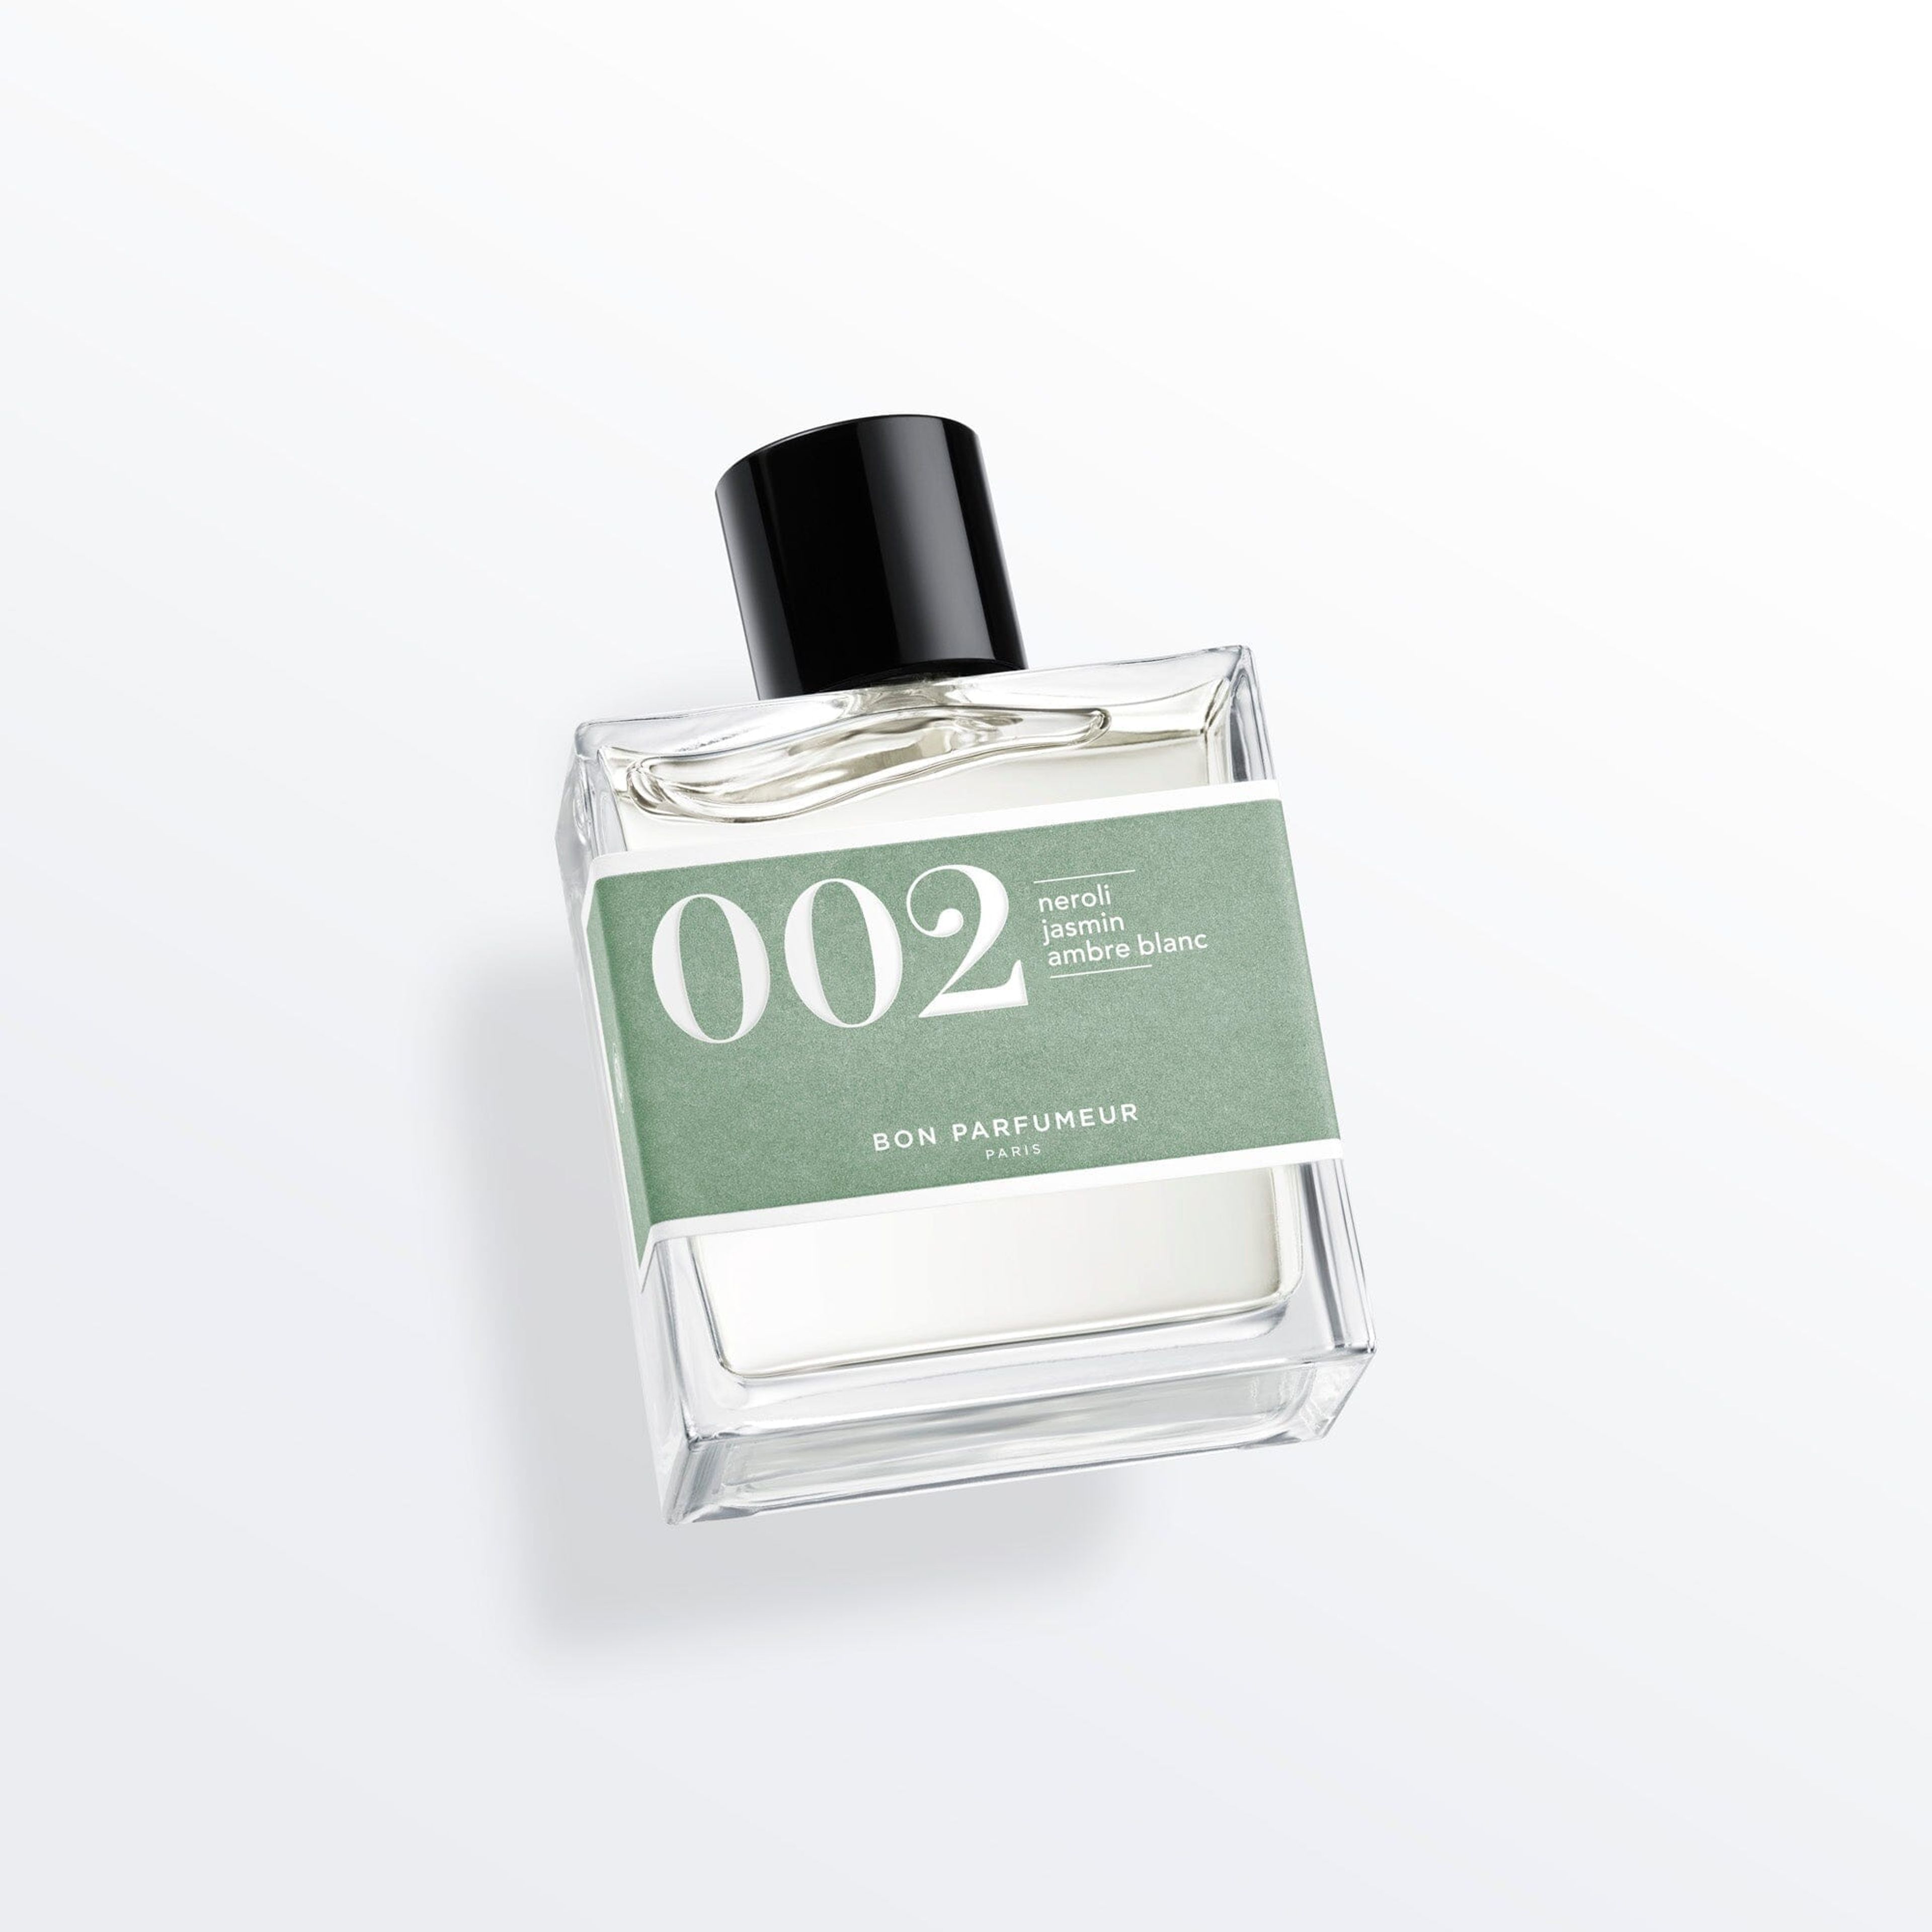 Eau de parfum 002 with neroli, jasmine and white amber